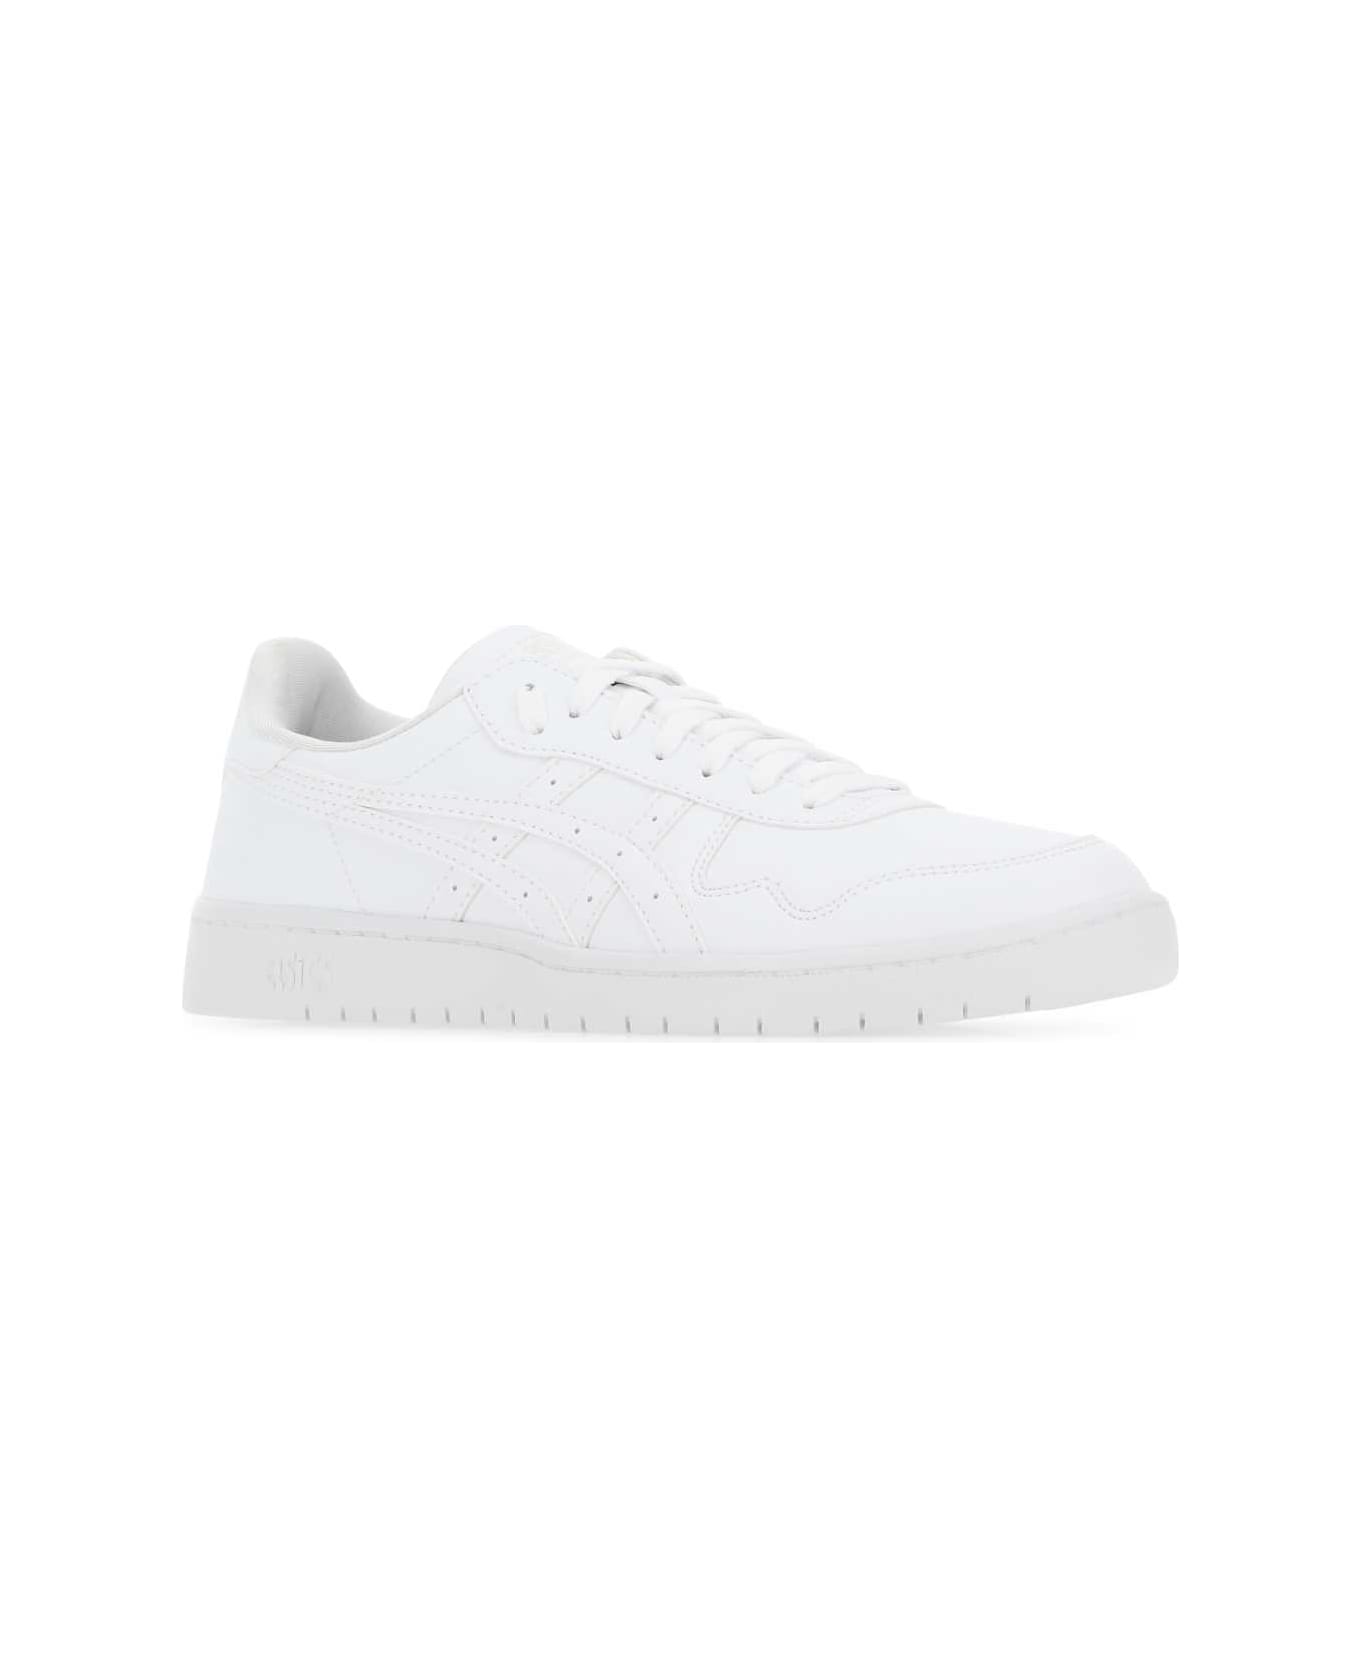 Comme des Garçons Shirt White Leather Japan Sneakers - WHITE